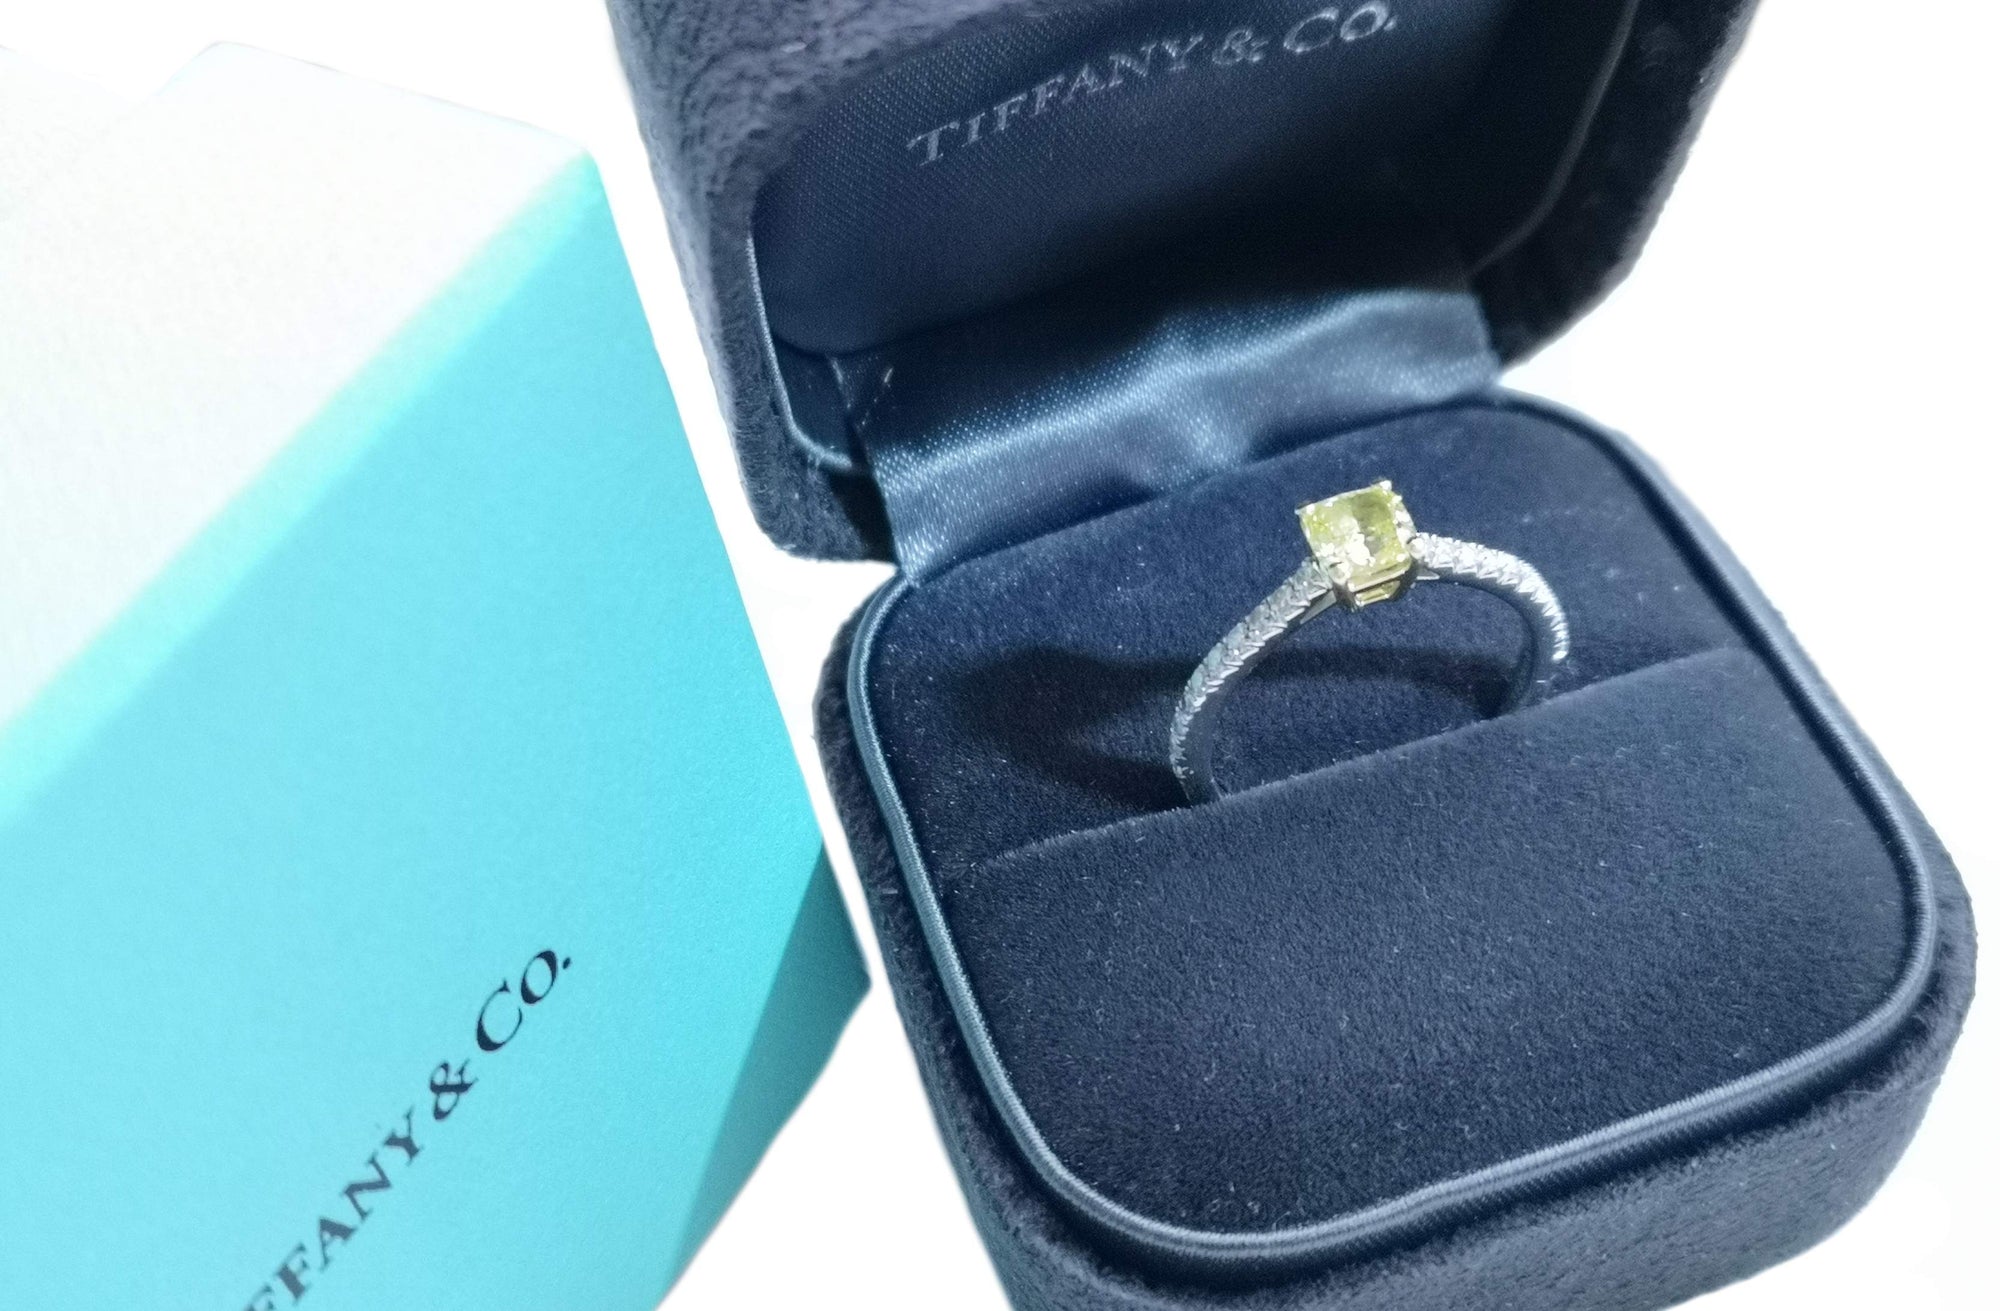 Tiffany & Co. 0.53ct FVY/VS1 Fancy Vivid Yellow 'Novo' Diamond Engagement Ring